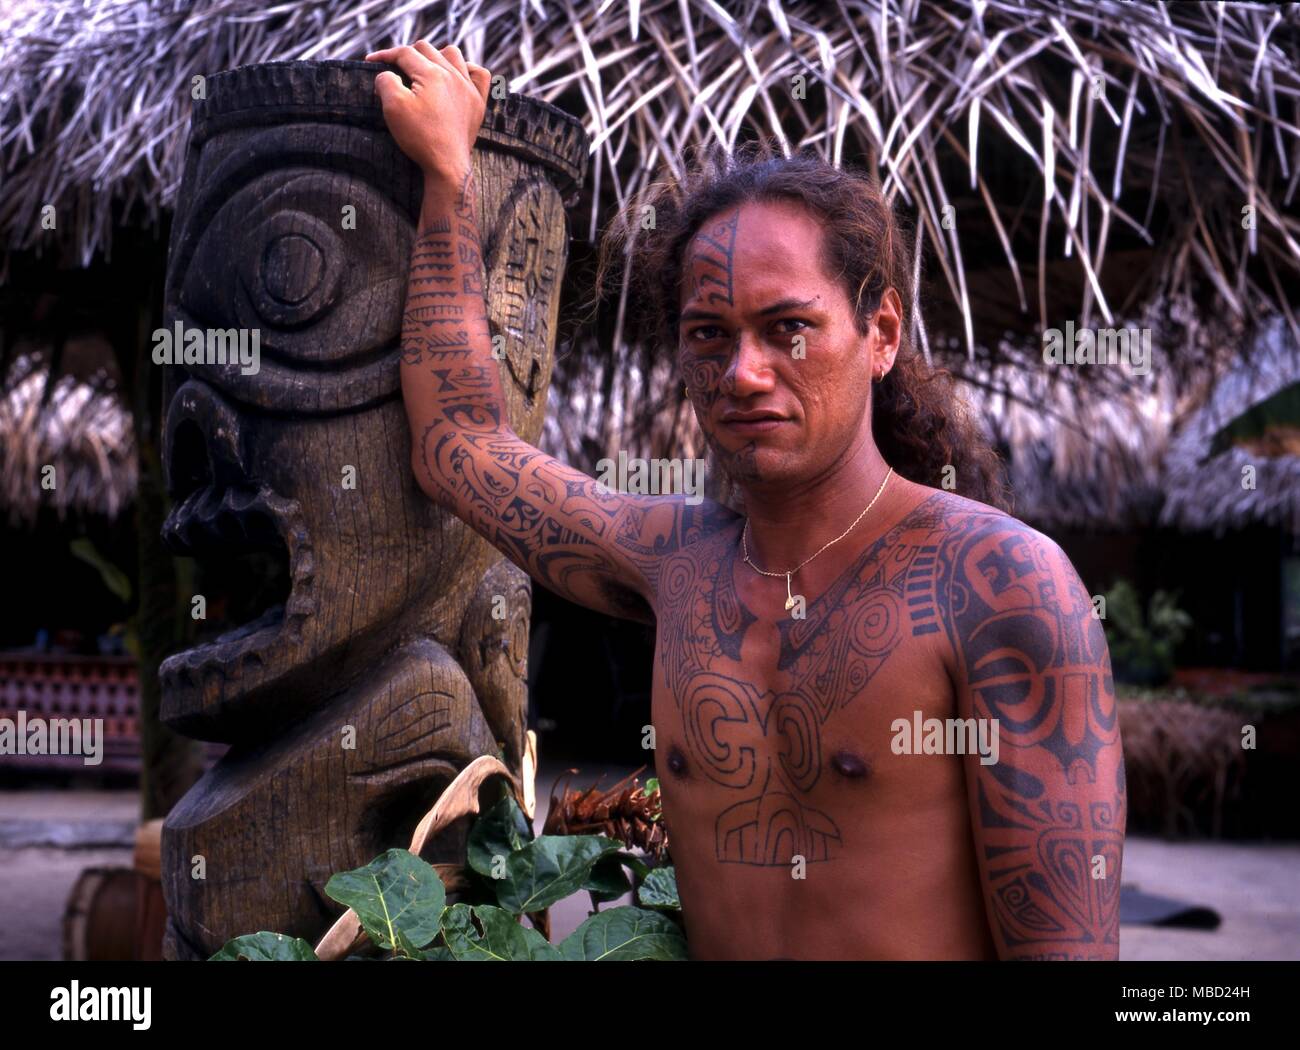 Polynesian facial and body tattoos Stock Photo - Alamy